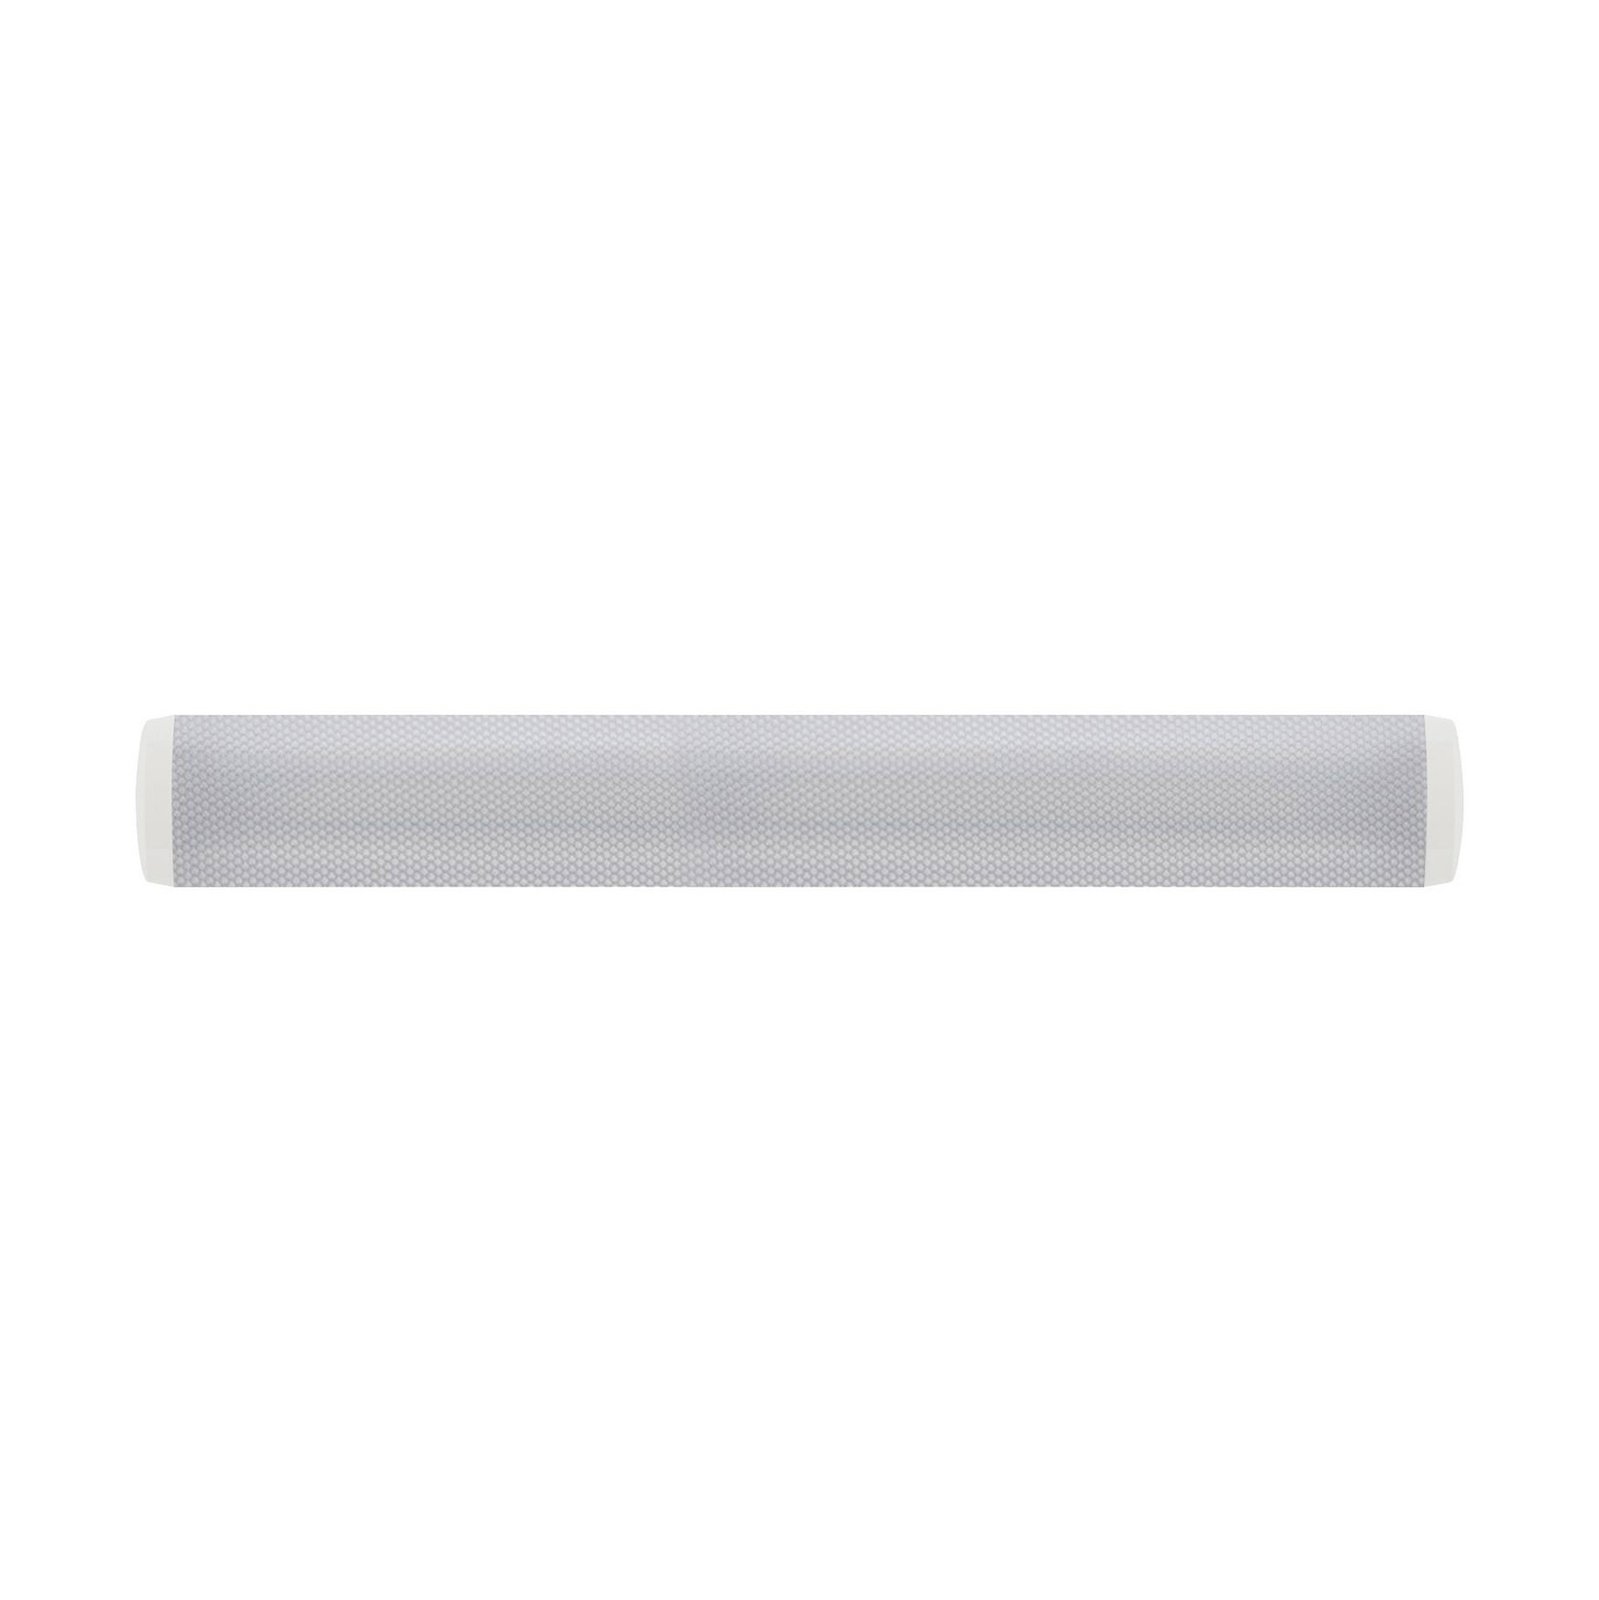 Artemis LED ceiling light, length 97.6 cm